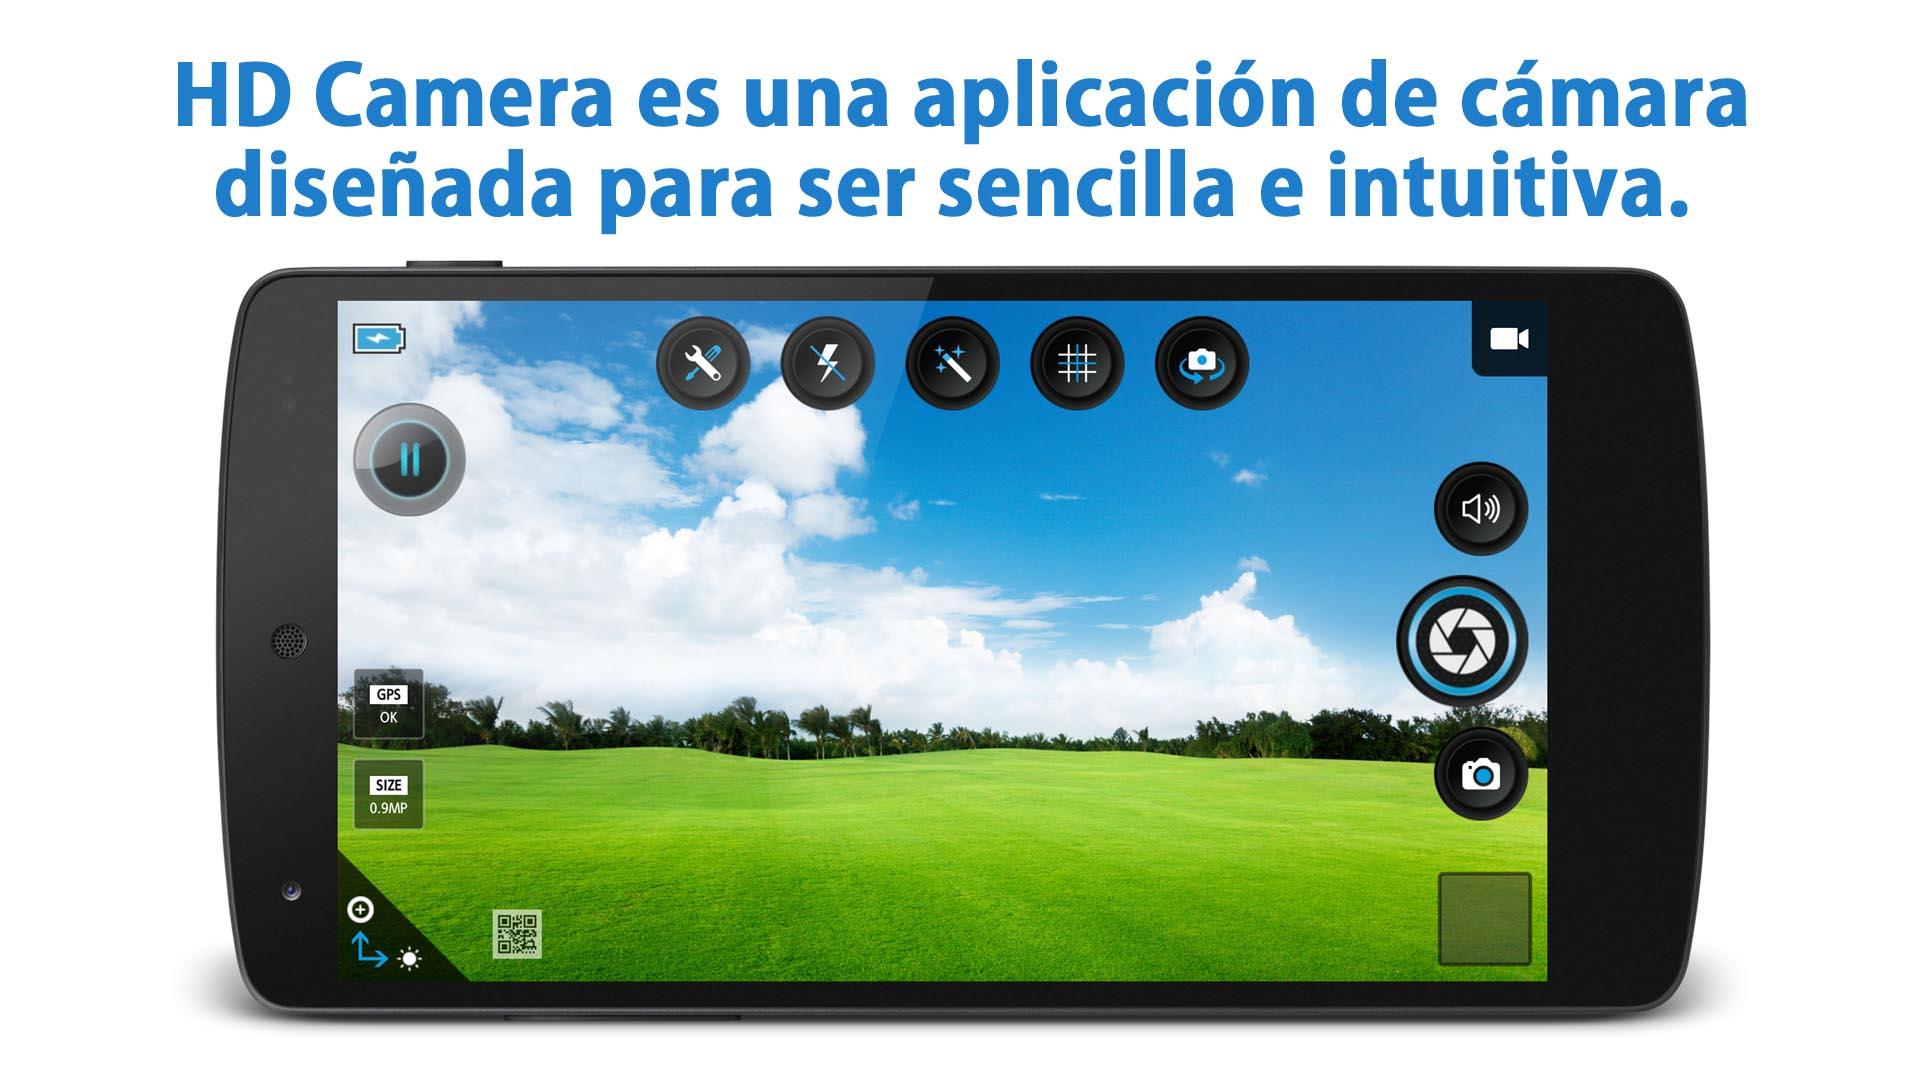 Android application HD Camera - silent shutter screenshort